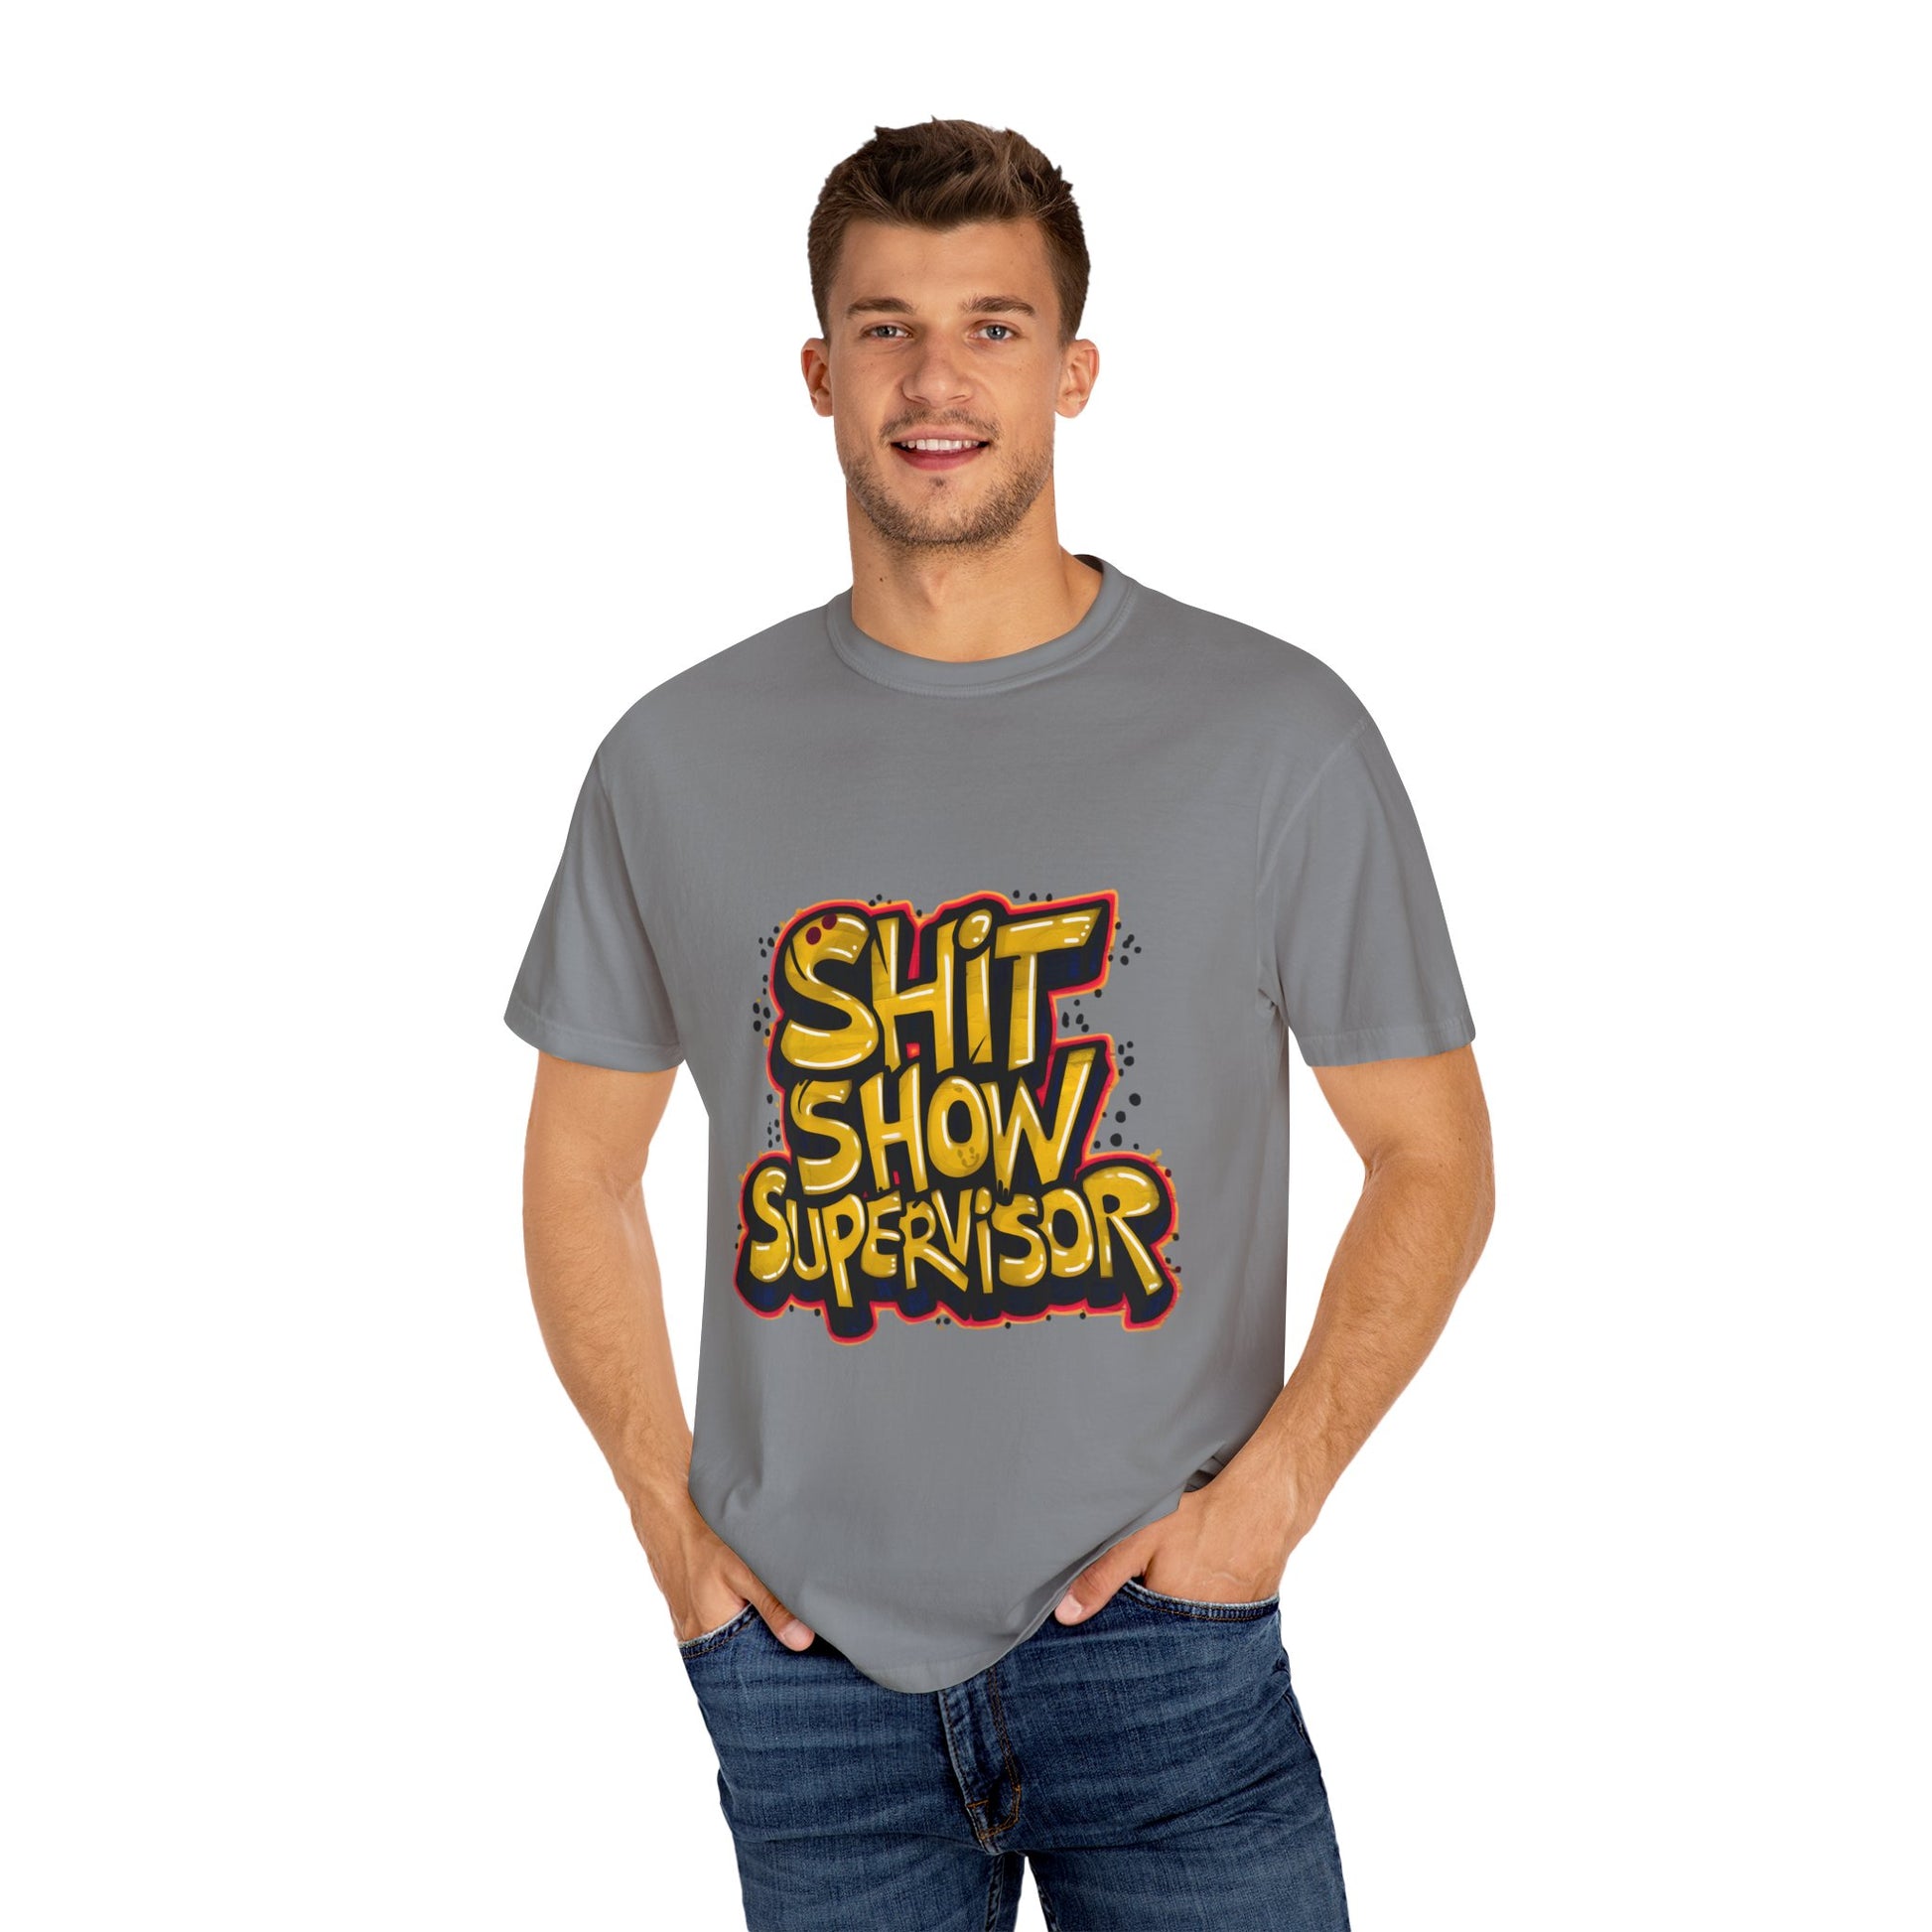 Shit Show Supervisor Urban Sarcastic Graphic Unisex Garment Dyed T-shirt Cotton Funny Humorous Graphic Soft Premium Unisex Men Women Grey T-shirt Birthday Gift-42